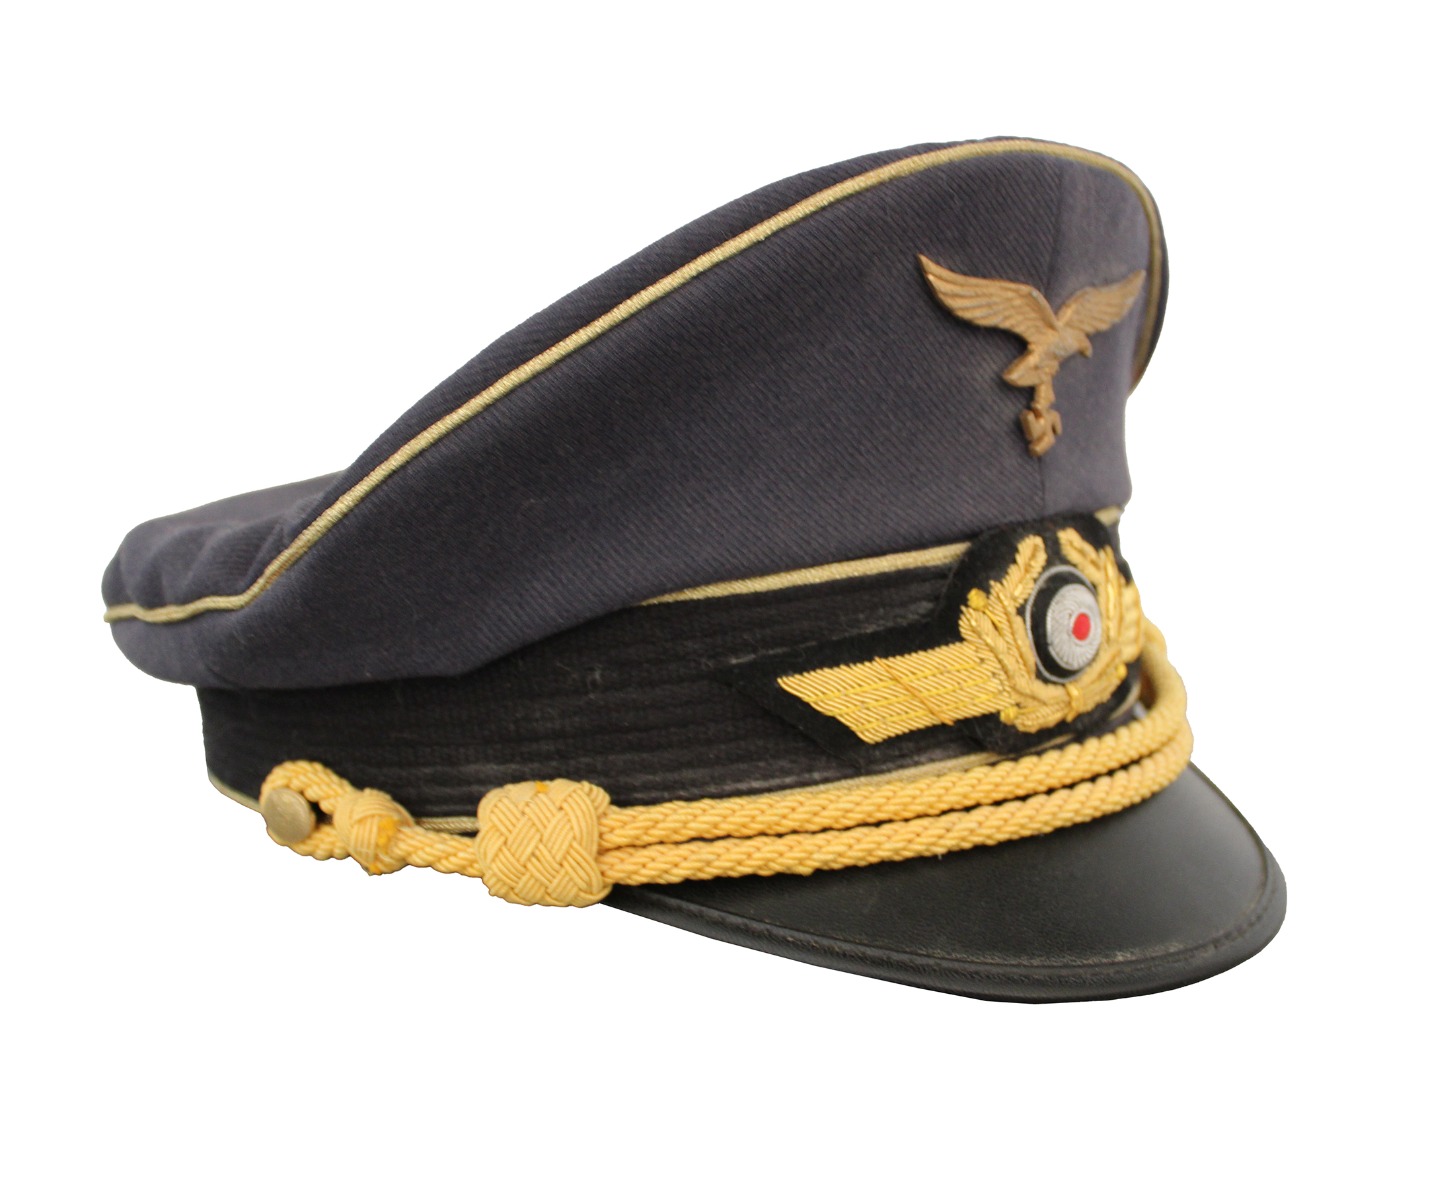 GERMAN WW2 LUFTWAFFE GENERAL VISOR CAP MADE BY JANKE